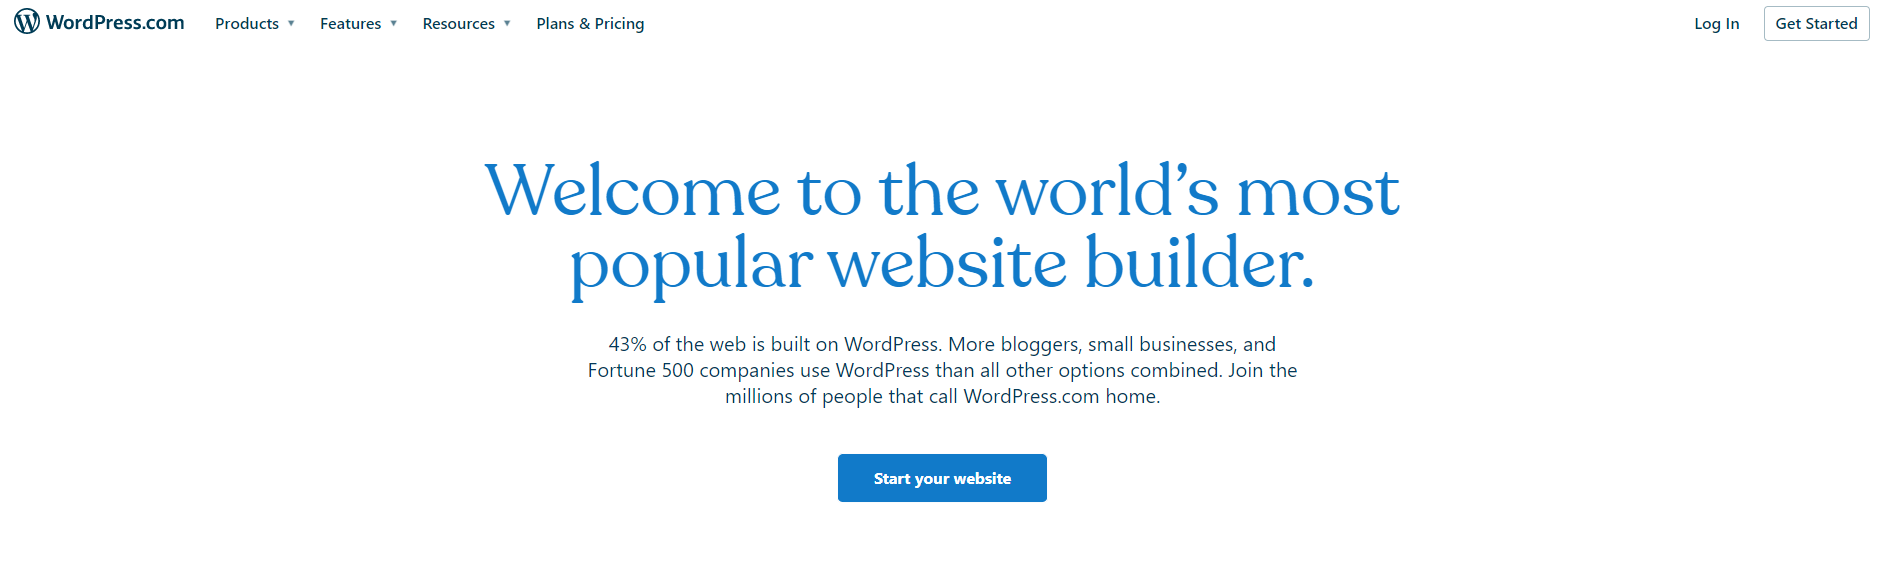 2. WordPress.com